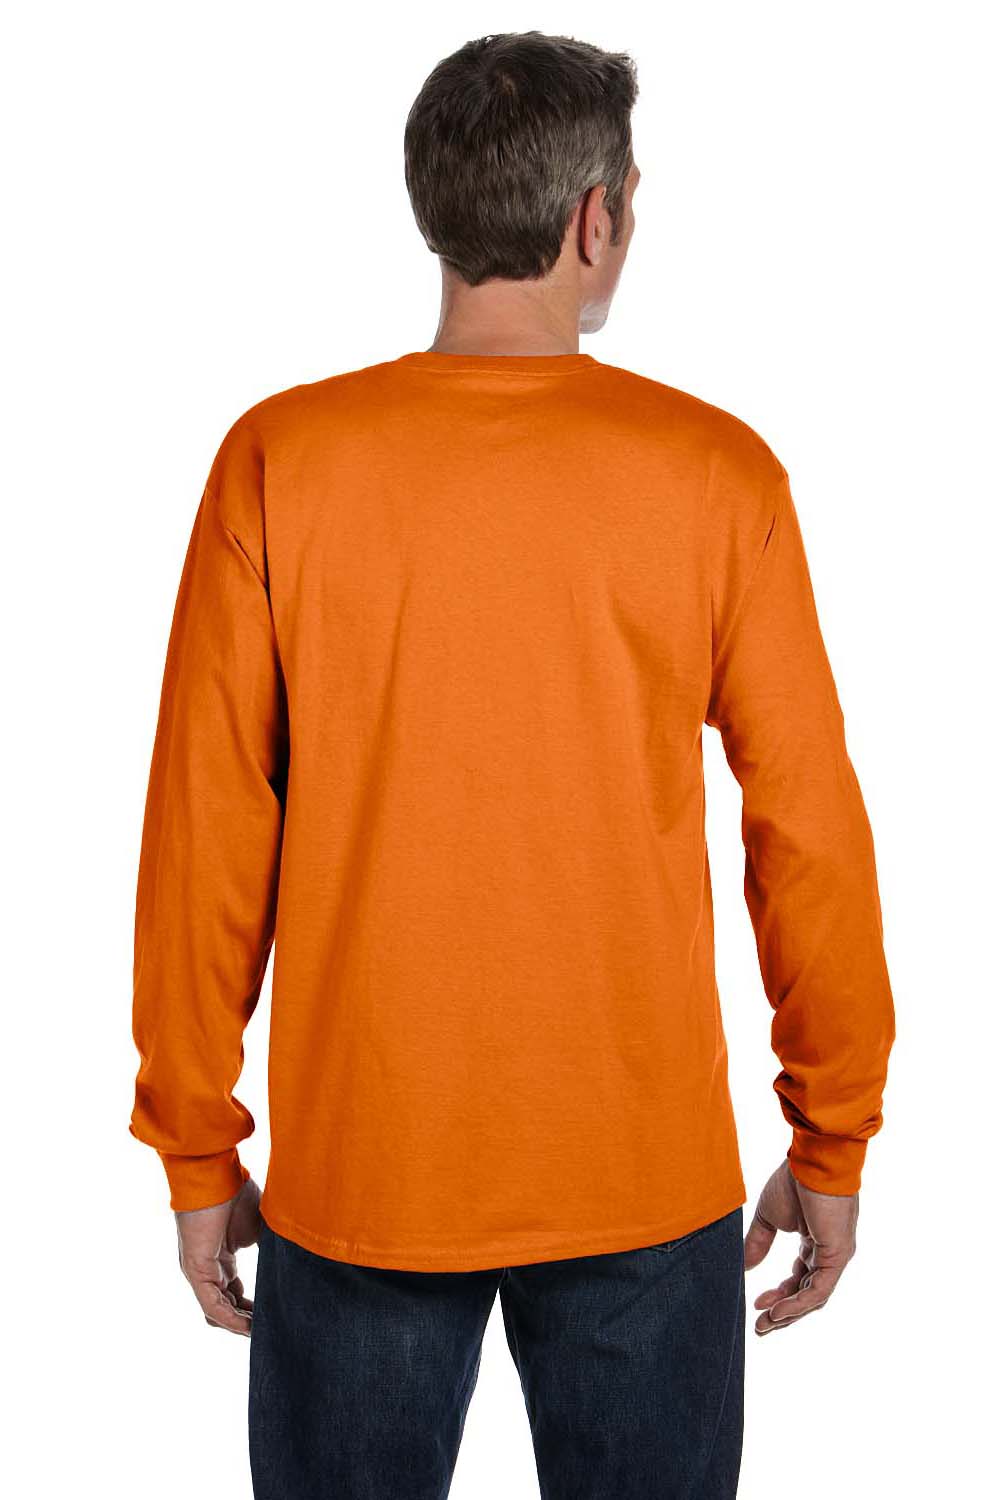 Hanes 5596 Mens ComfortSoft Long Sleeve Crewneck T-Shirt w/ Pocket Orange Back